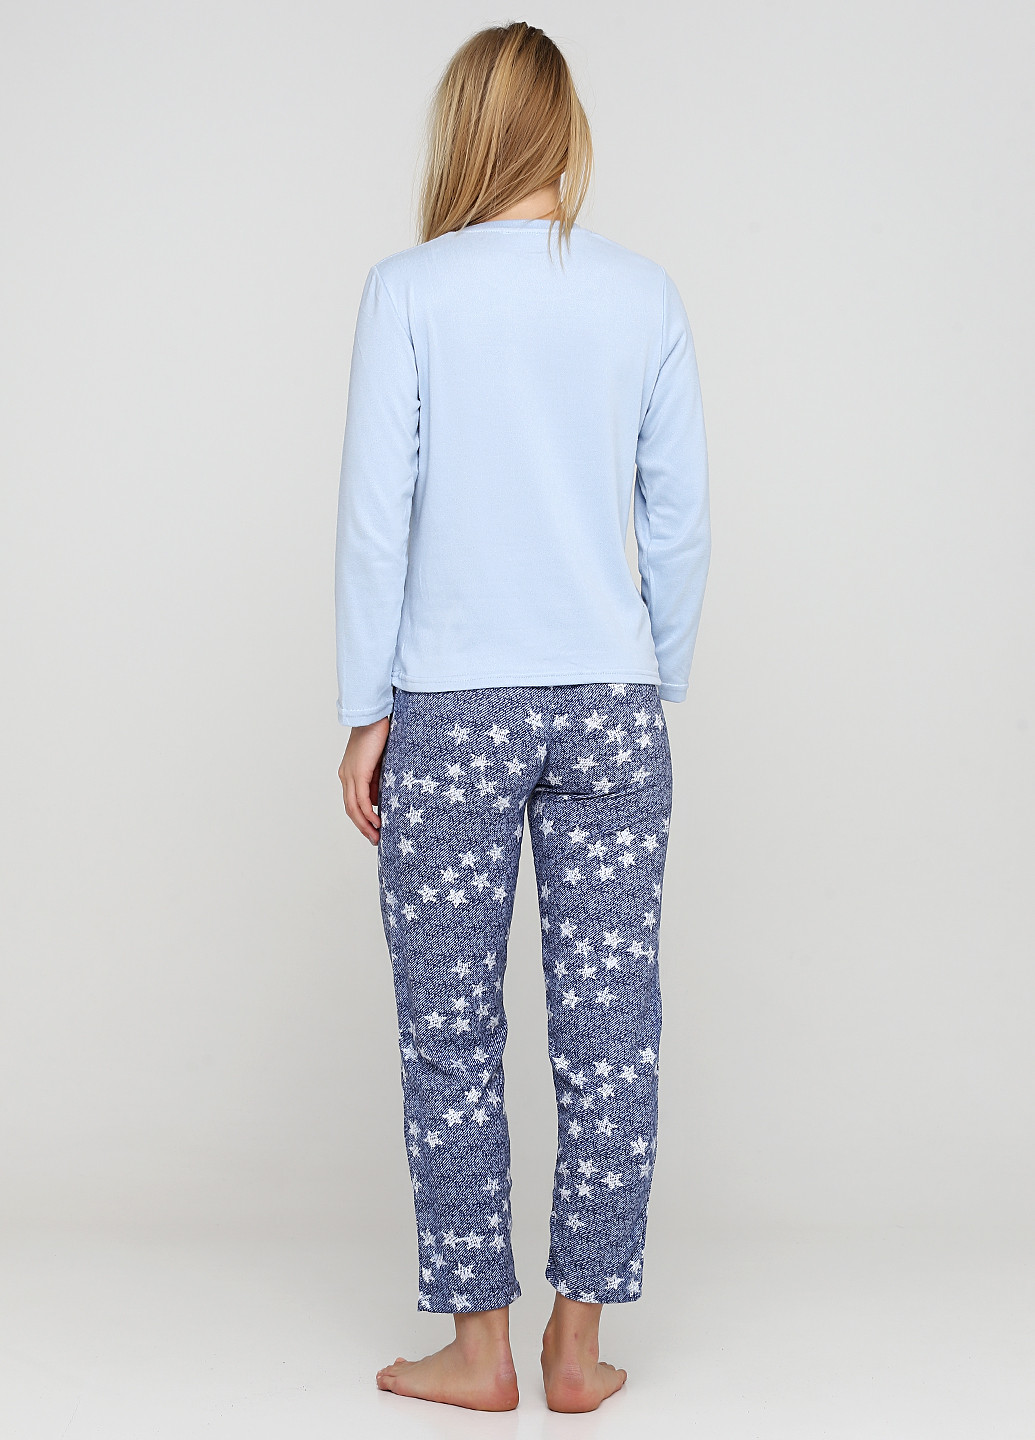 Голубая всесезон пижама (лонгслив, брюки) лонгслив + брюки Pijamoni